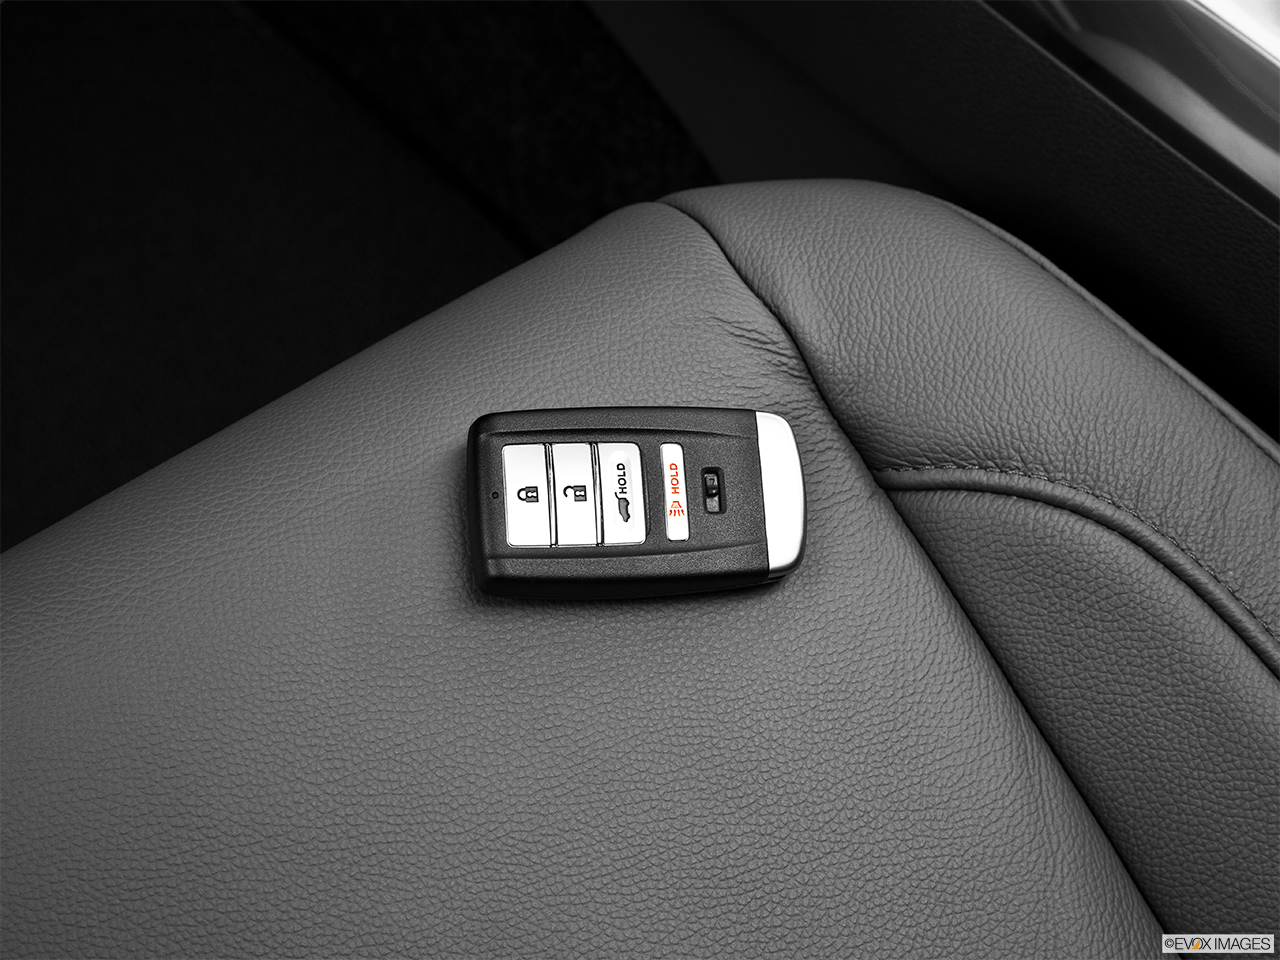 2014 Acura MDX SH-AWD Key fob on driver's seat. 